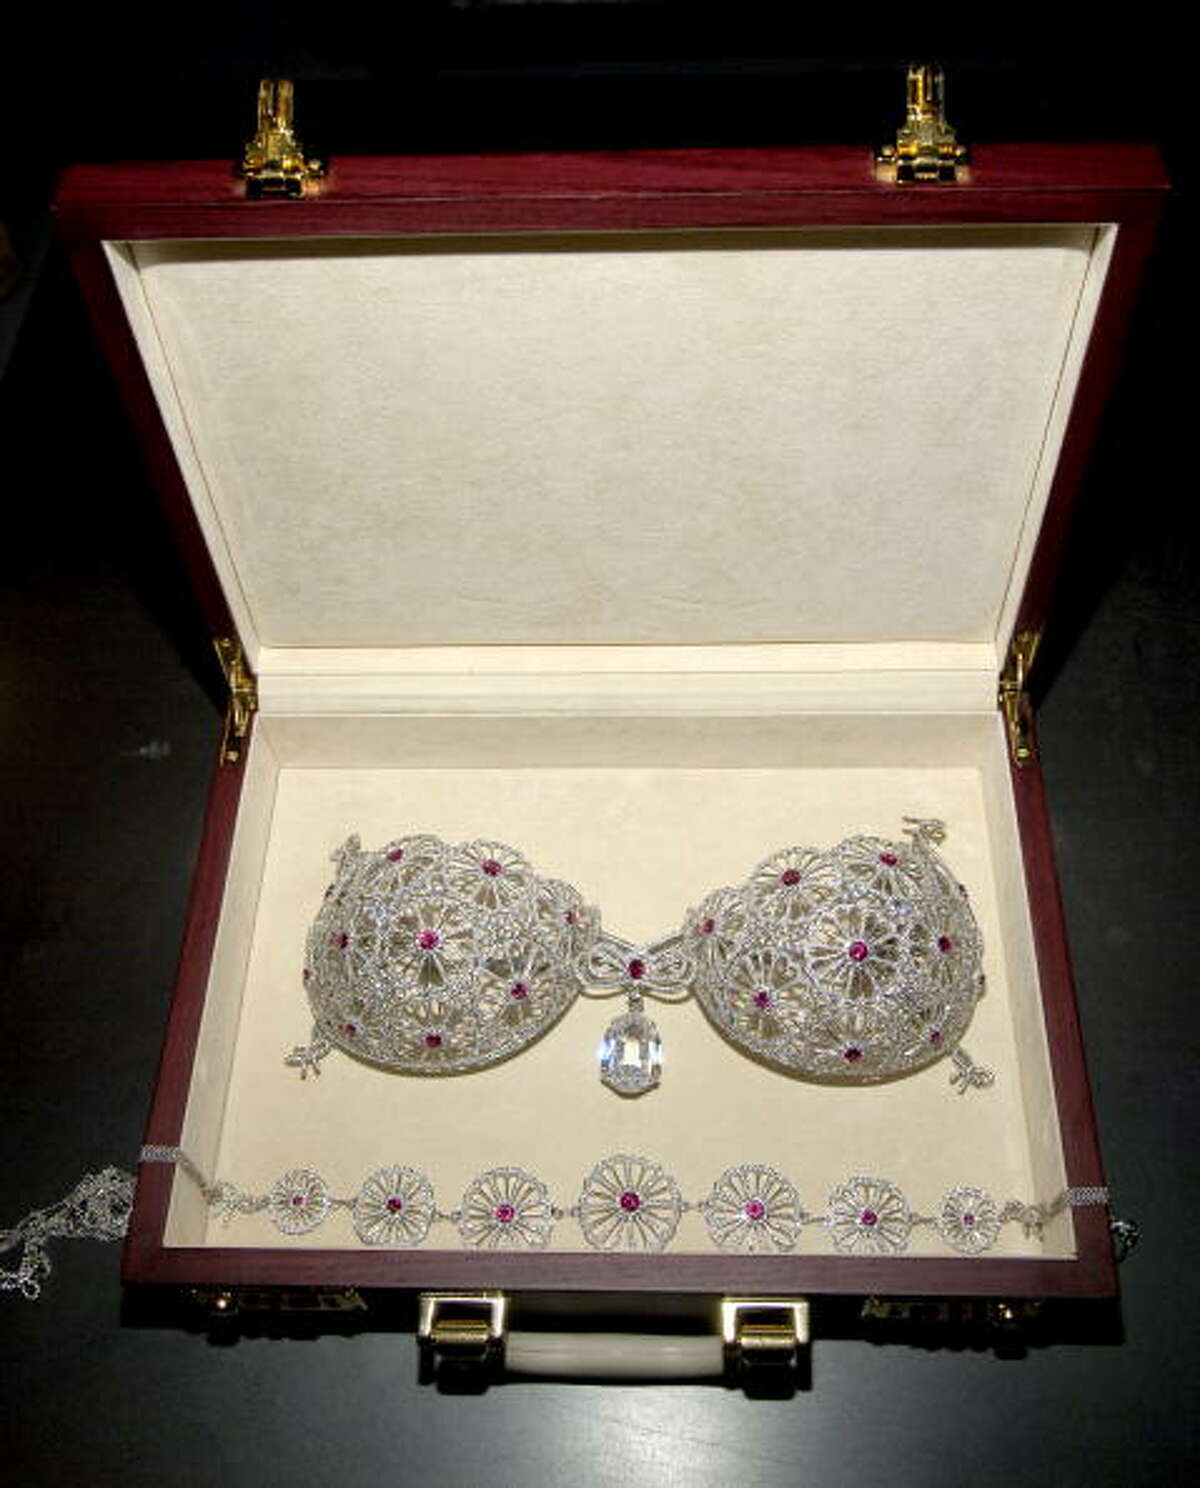 CelebCon: Victoria's Secret fantasy bras through the years